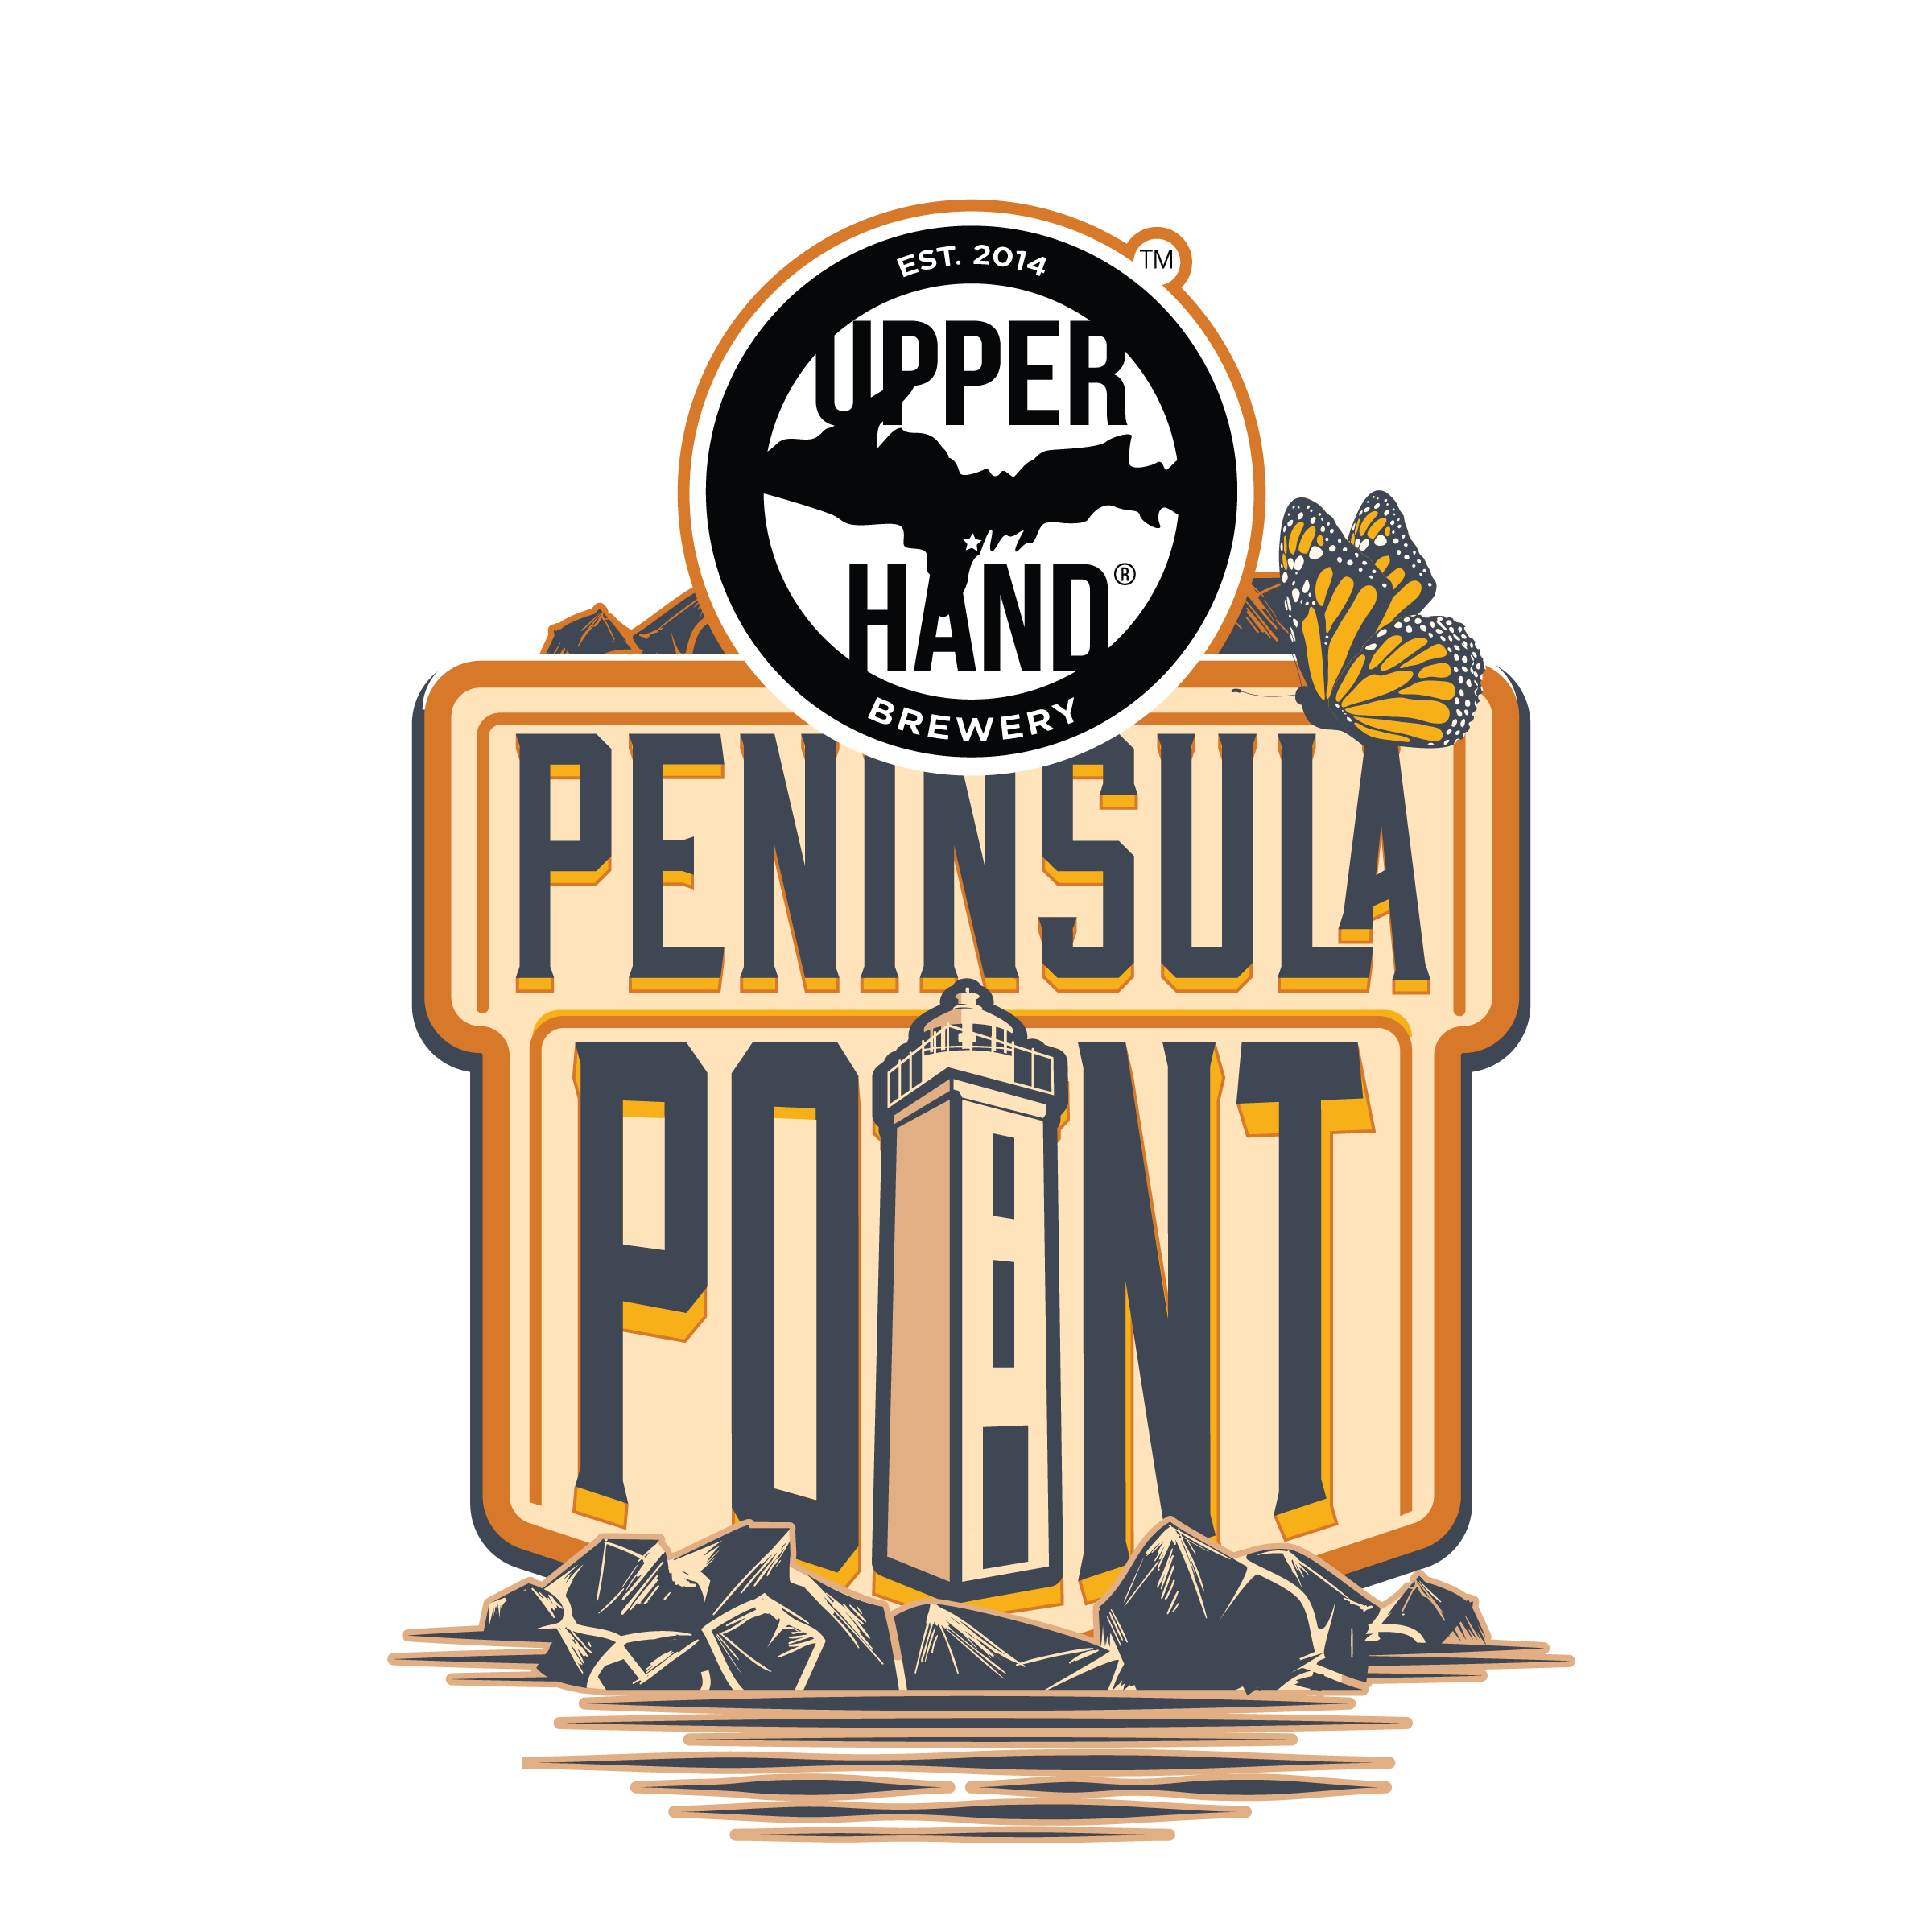 Peninsula Point